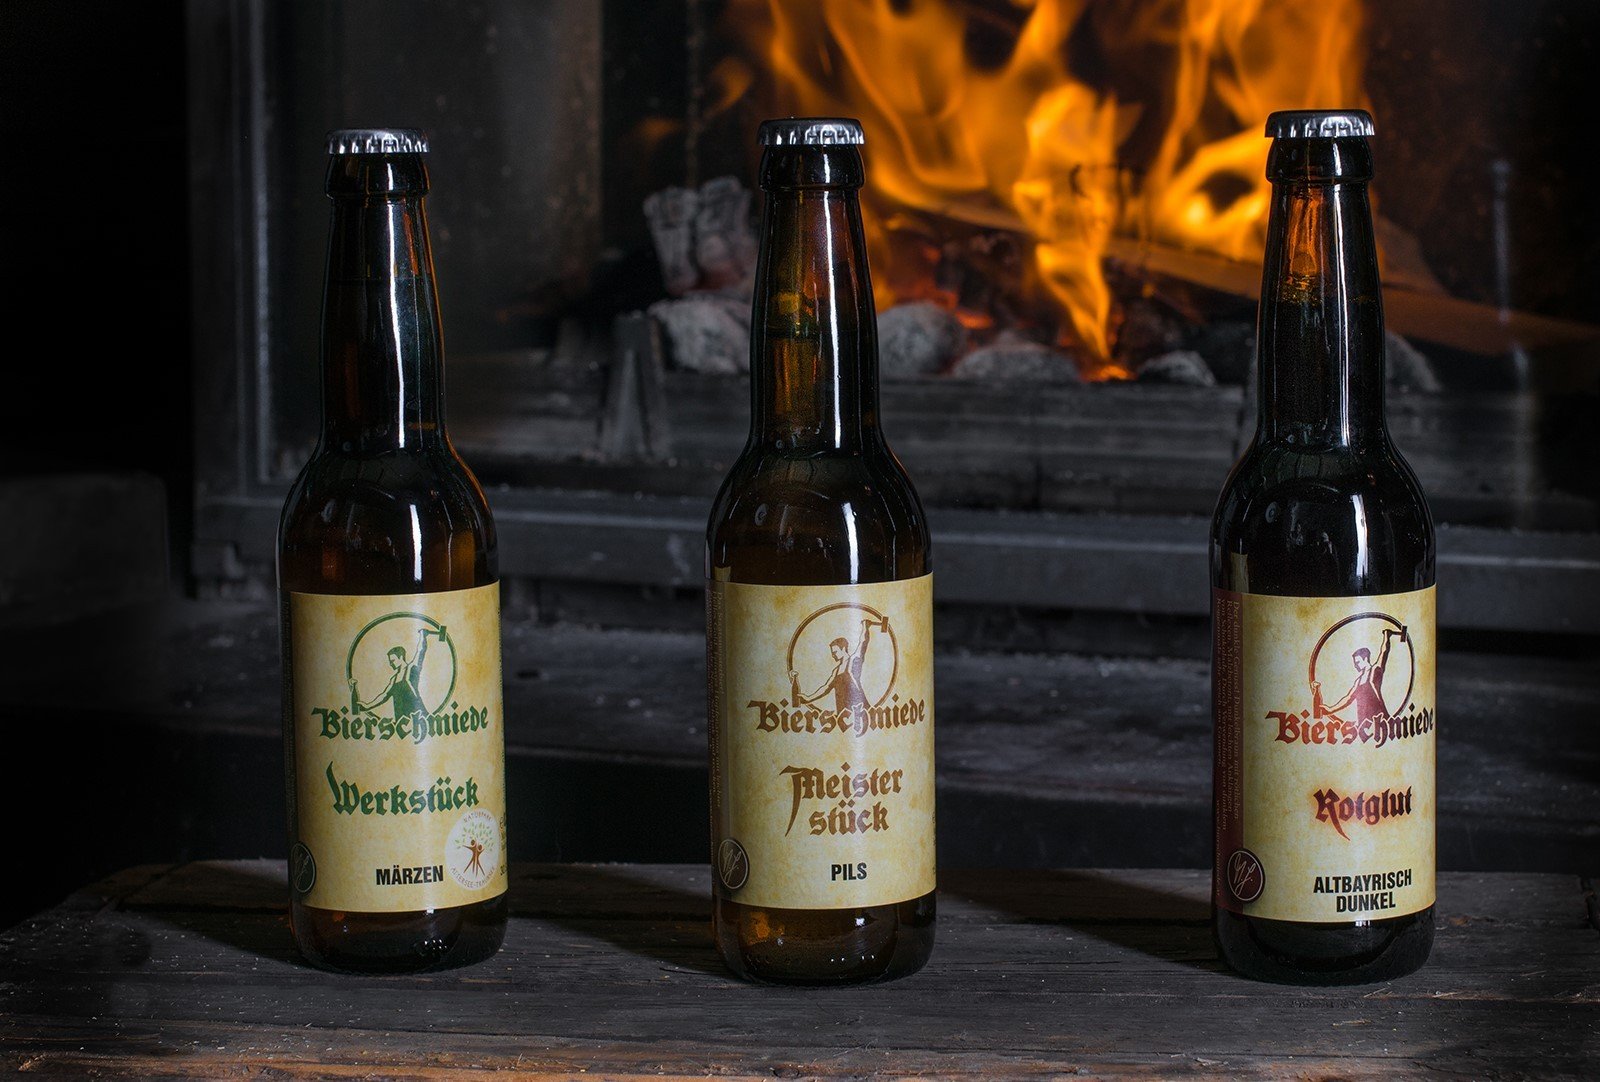 Bierschmiede brewery from Austria